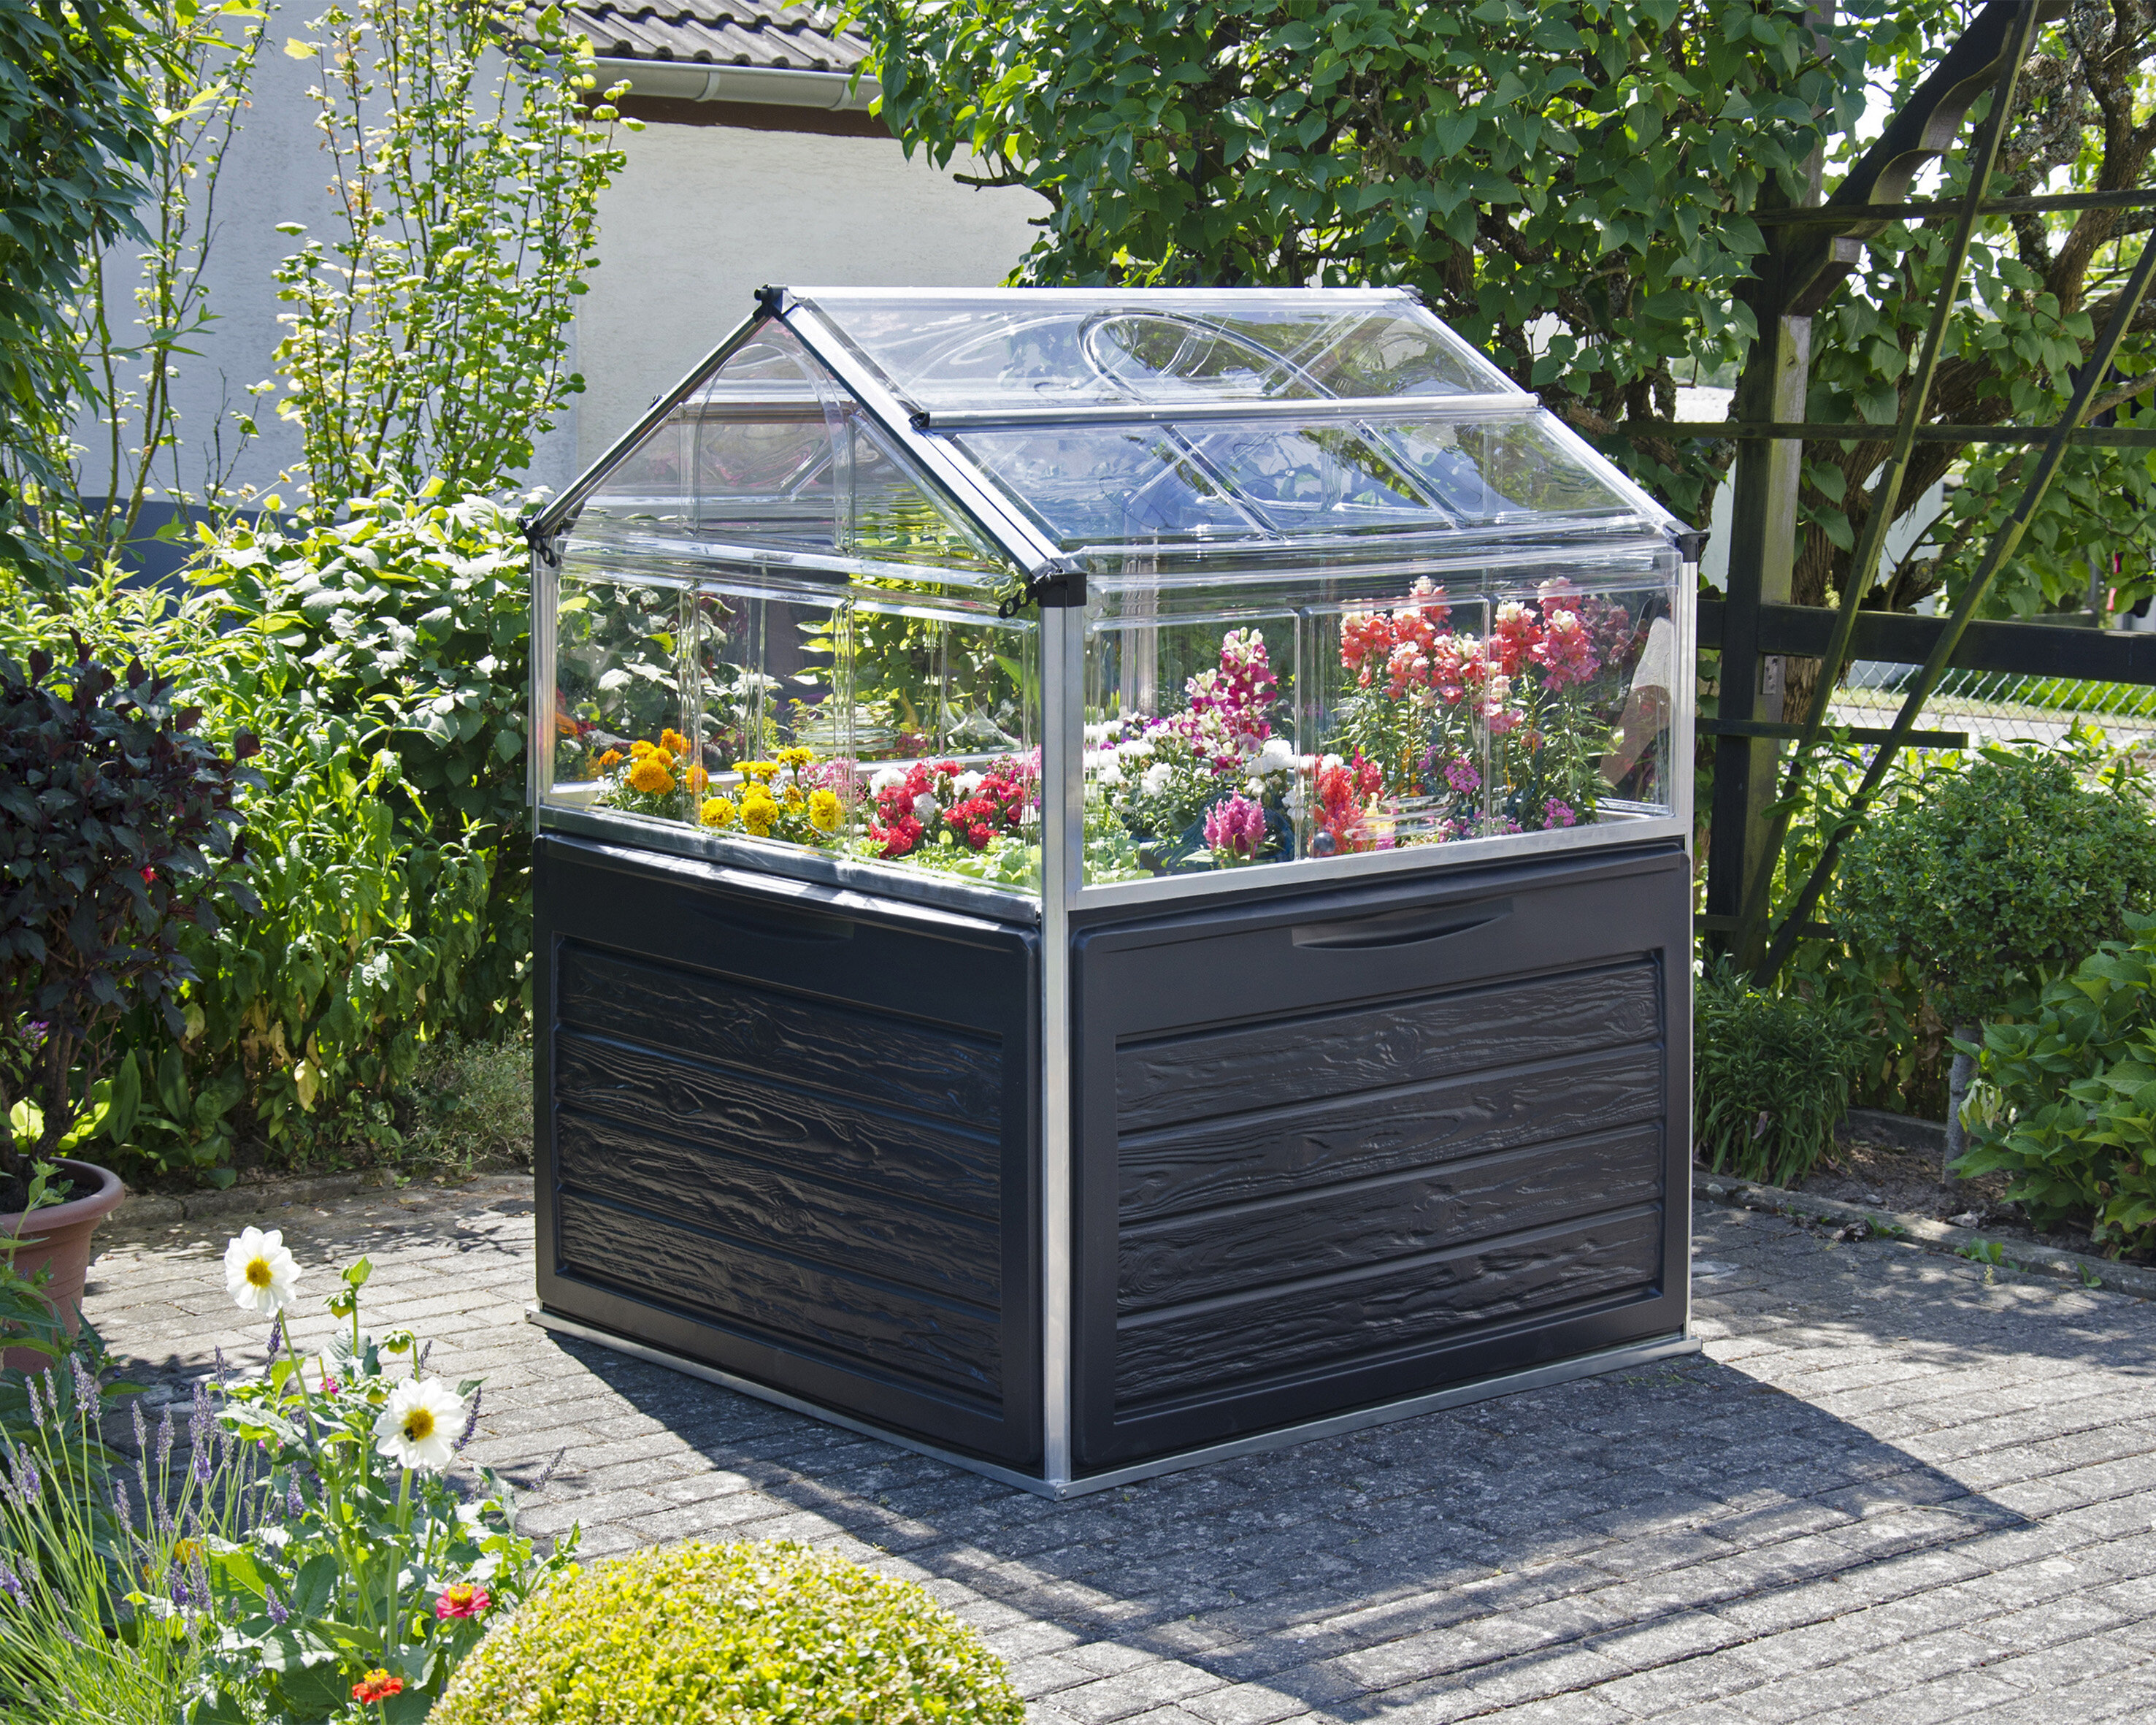 Dibiao Warm Greenhouse,Plastic Garden Green House Flower Plants Gardening Outdoor House